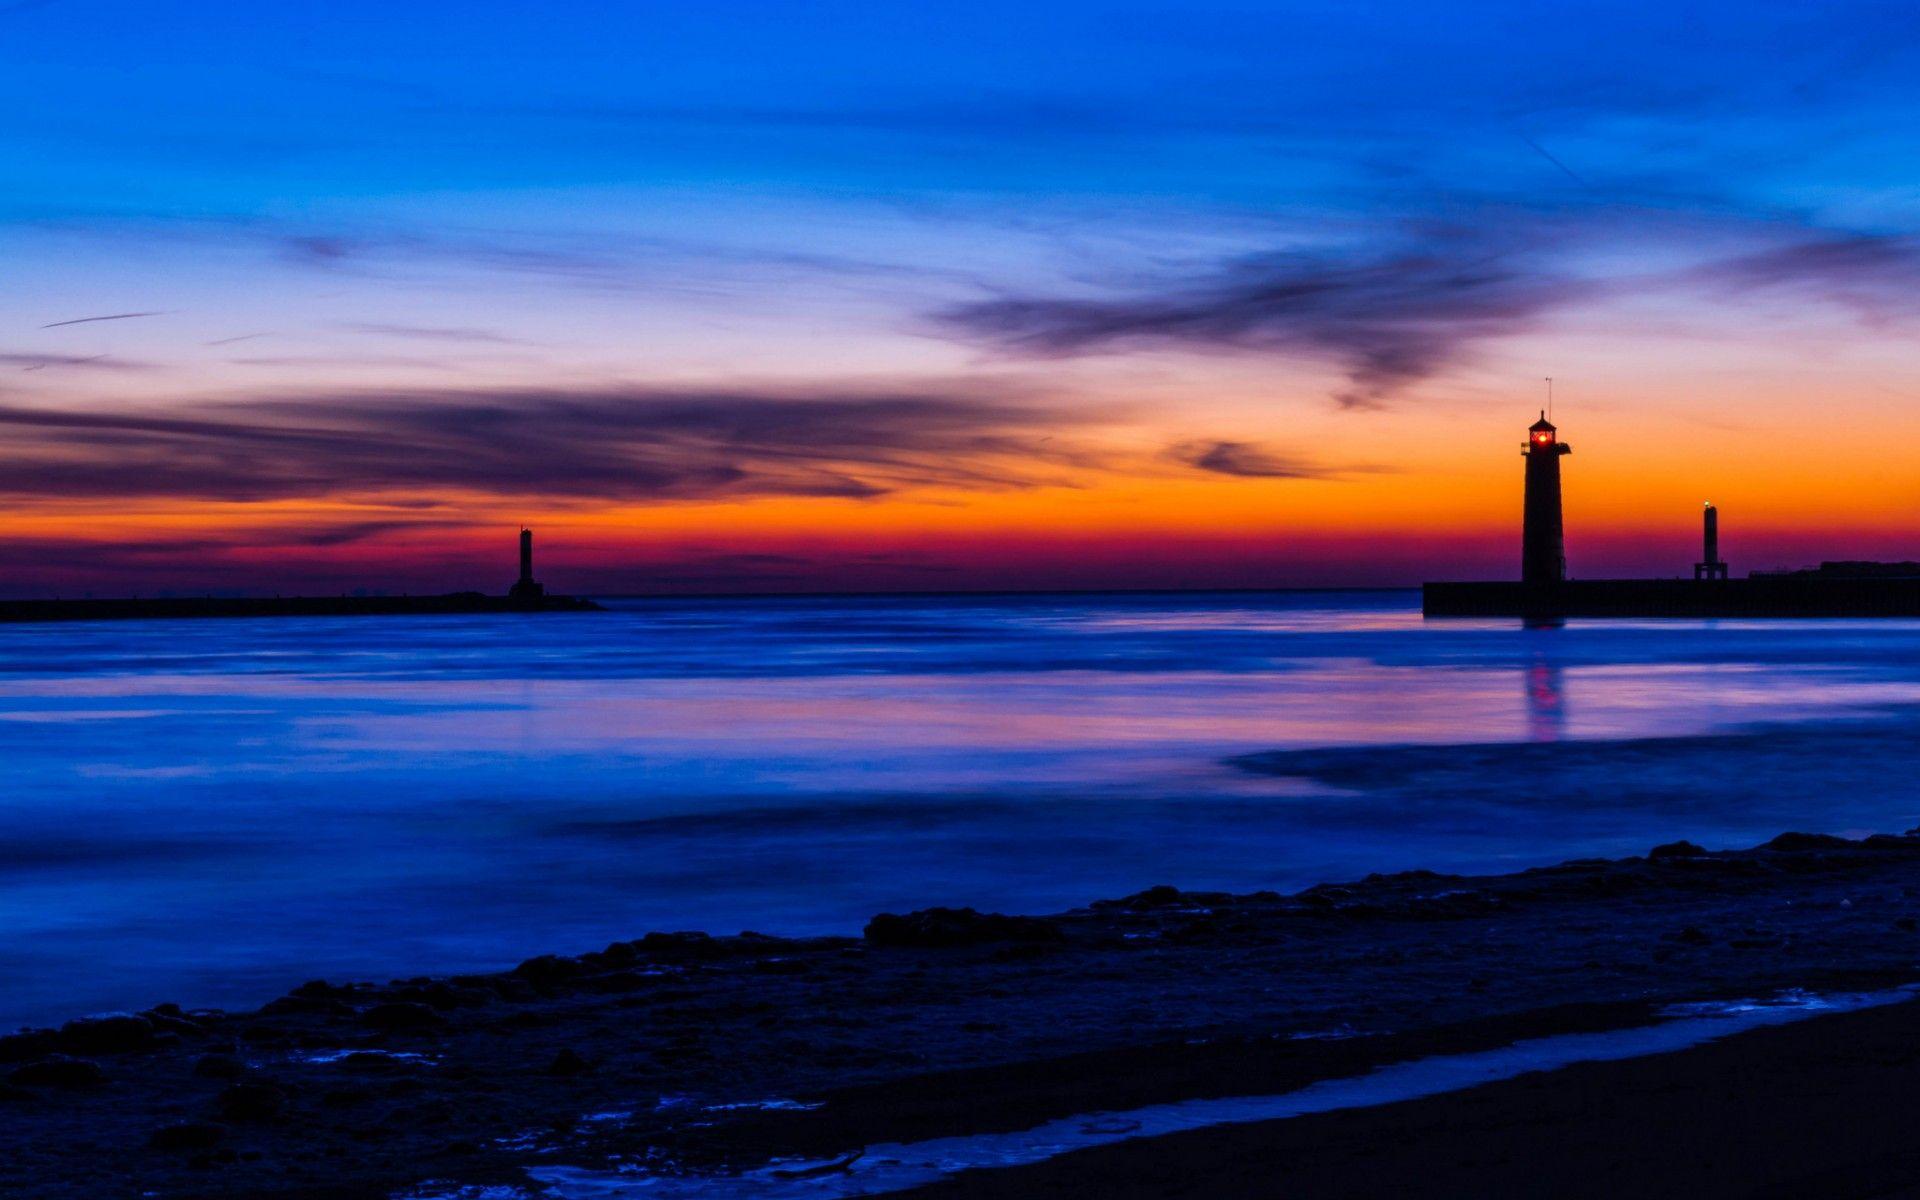 USA Michigan lake beach lighthouse night orange sunset blue sky